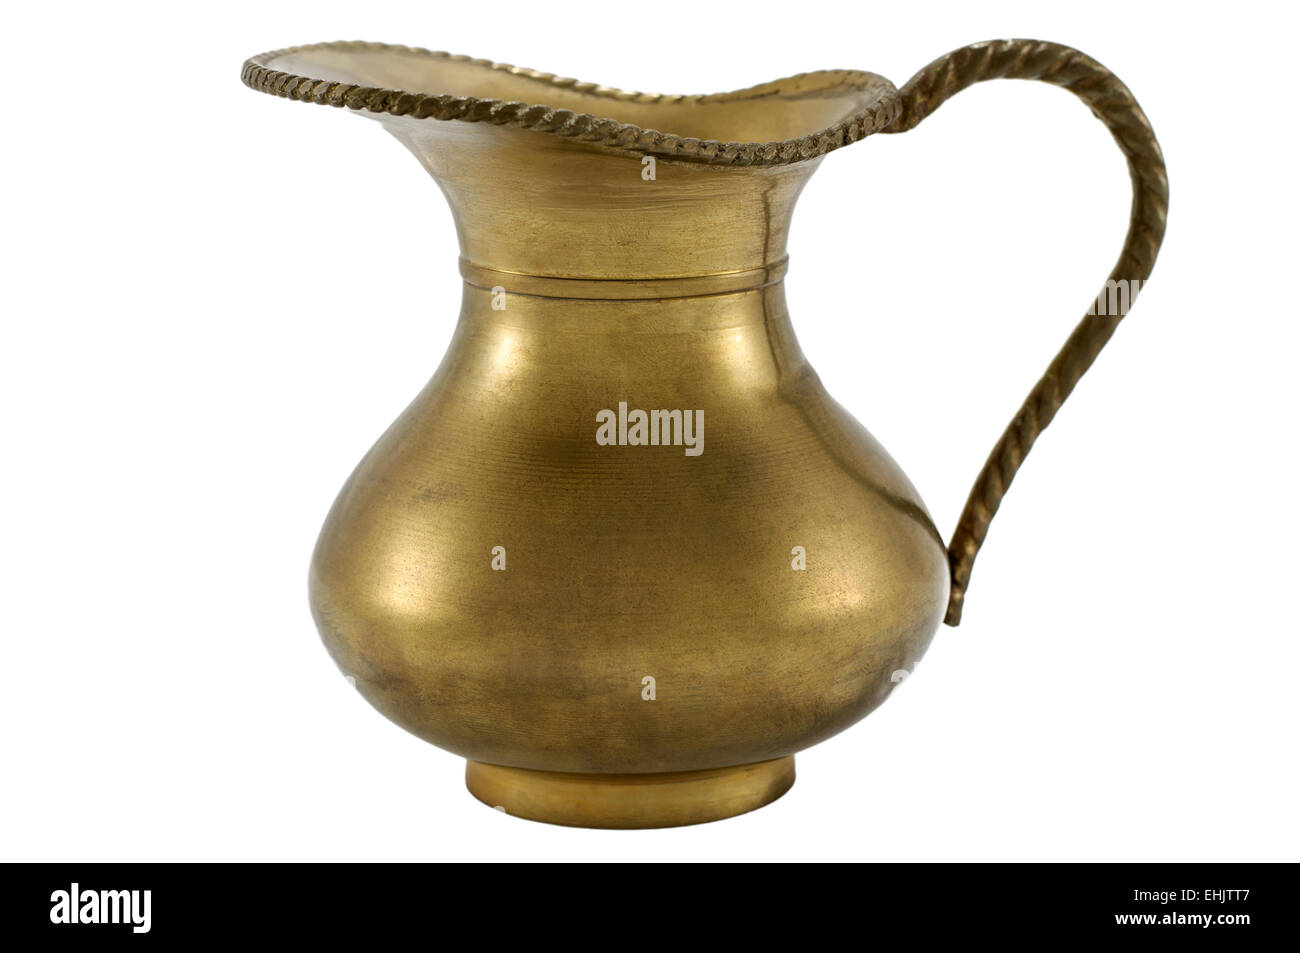 https://c8.alamy.com/comp/EHJTT7/antique-indian-brass-pitcher-isolated-on-white-background-EHJTT7.jpg